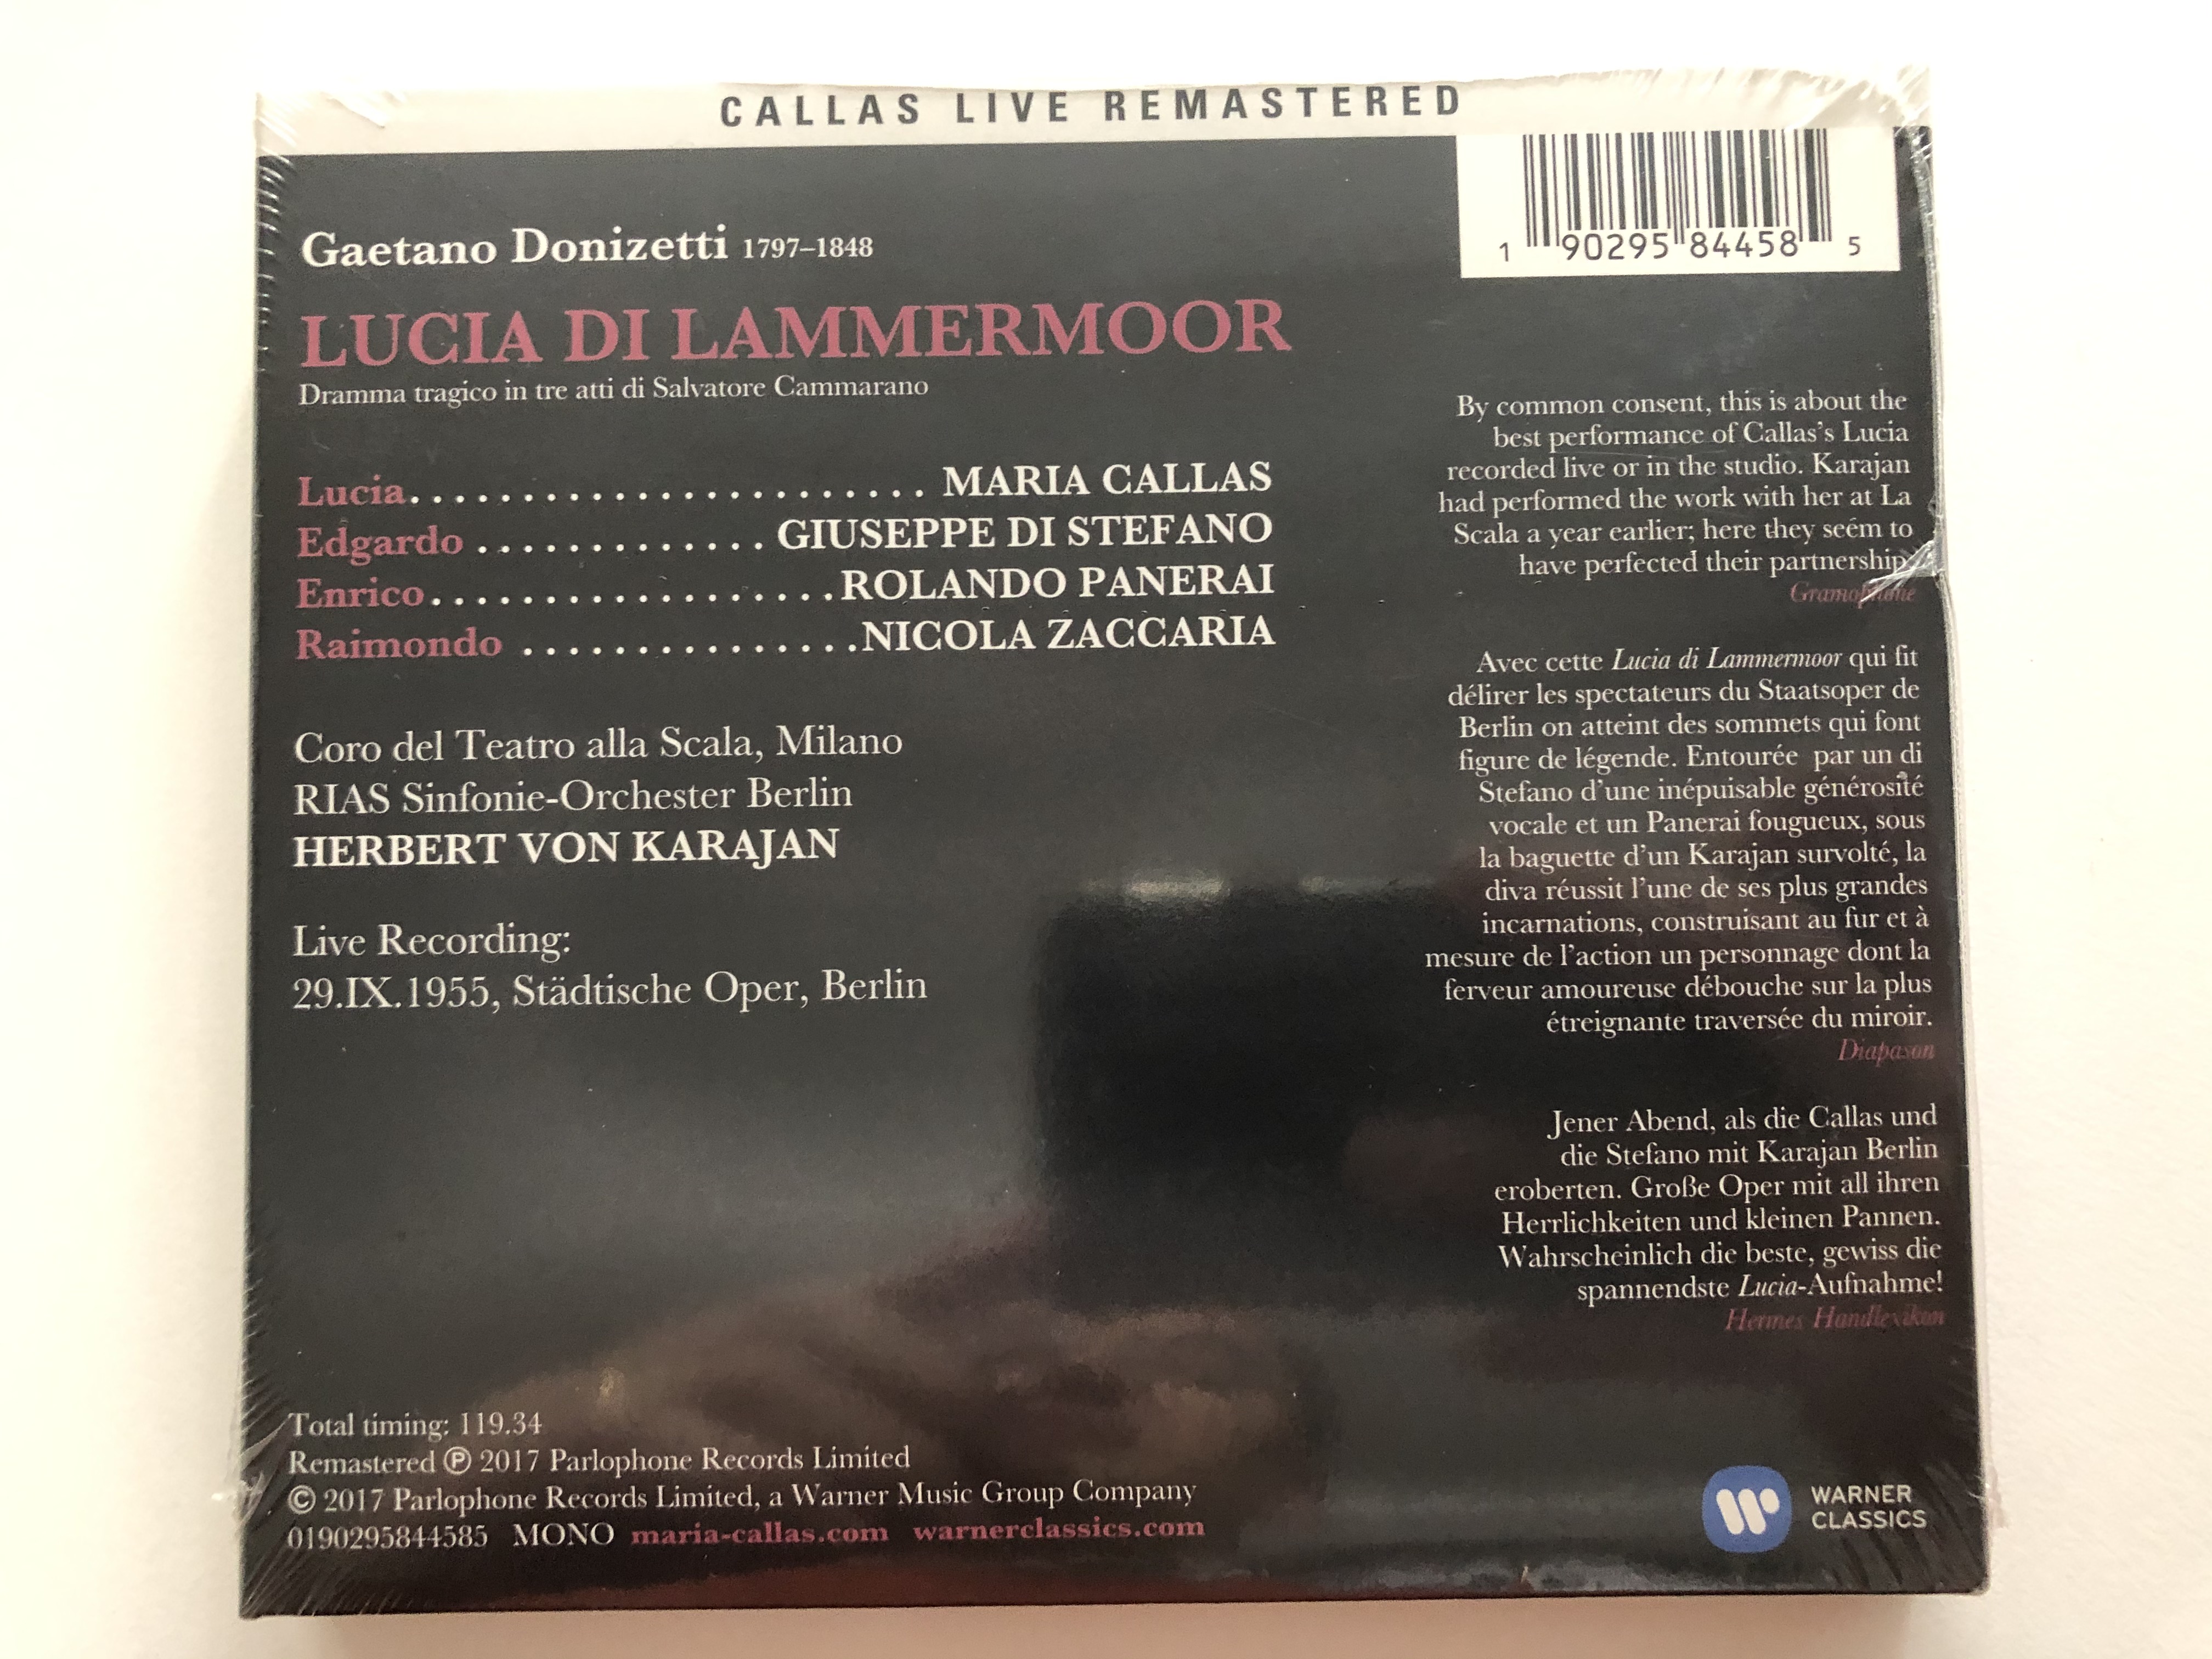 donizetti-lucia-di-lammermoor-maria-callas-giuseppe-di-stefano-herbert-von-karajan-paneraizaccaria-stadtische-oper-berlin-warner-classics-2x-audio-cd-2017-0190295844585-2-.jpg